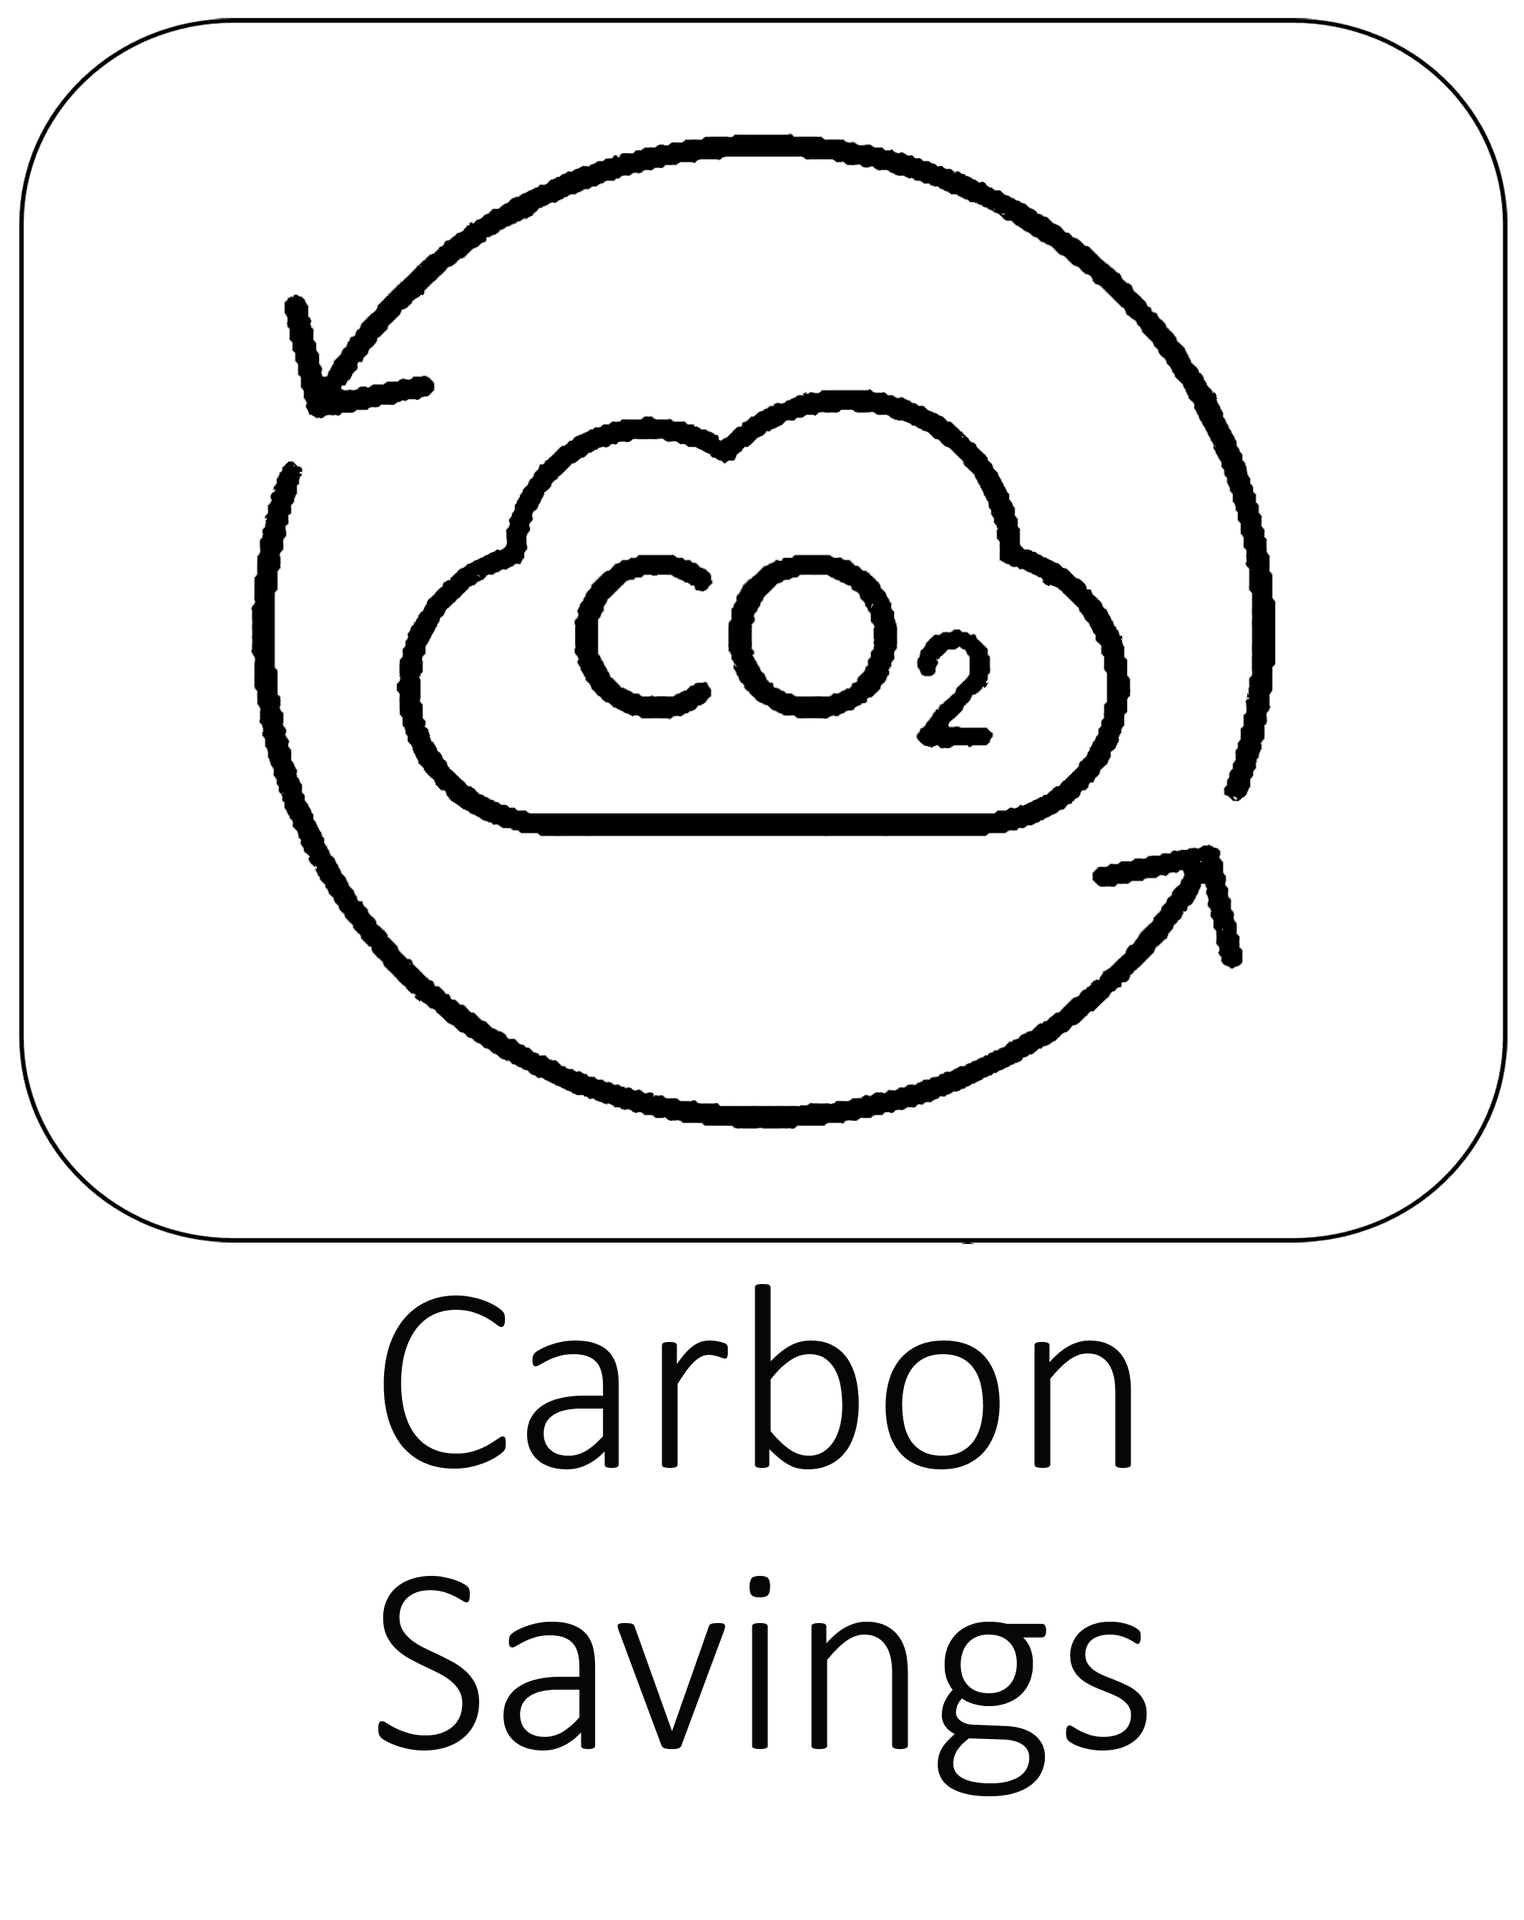 Carbon gain